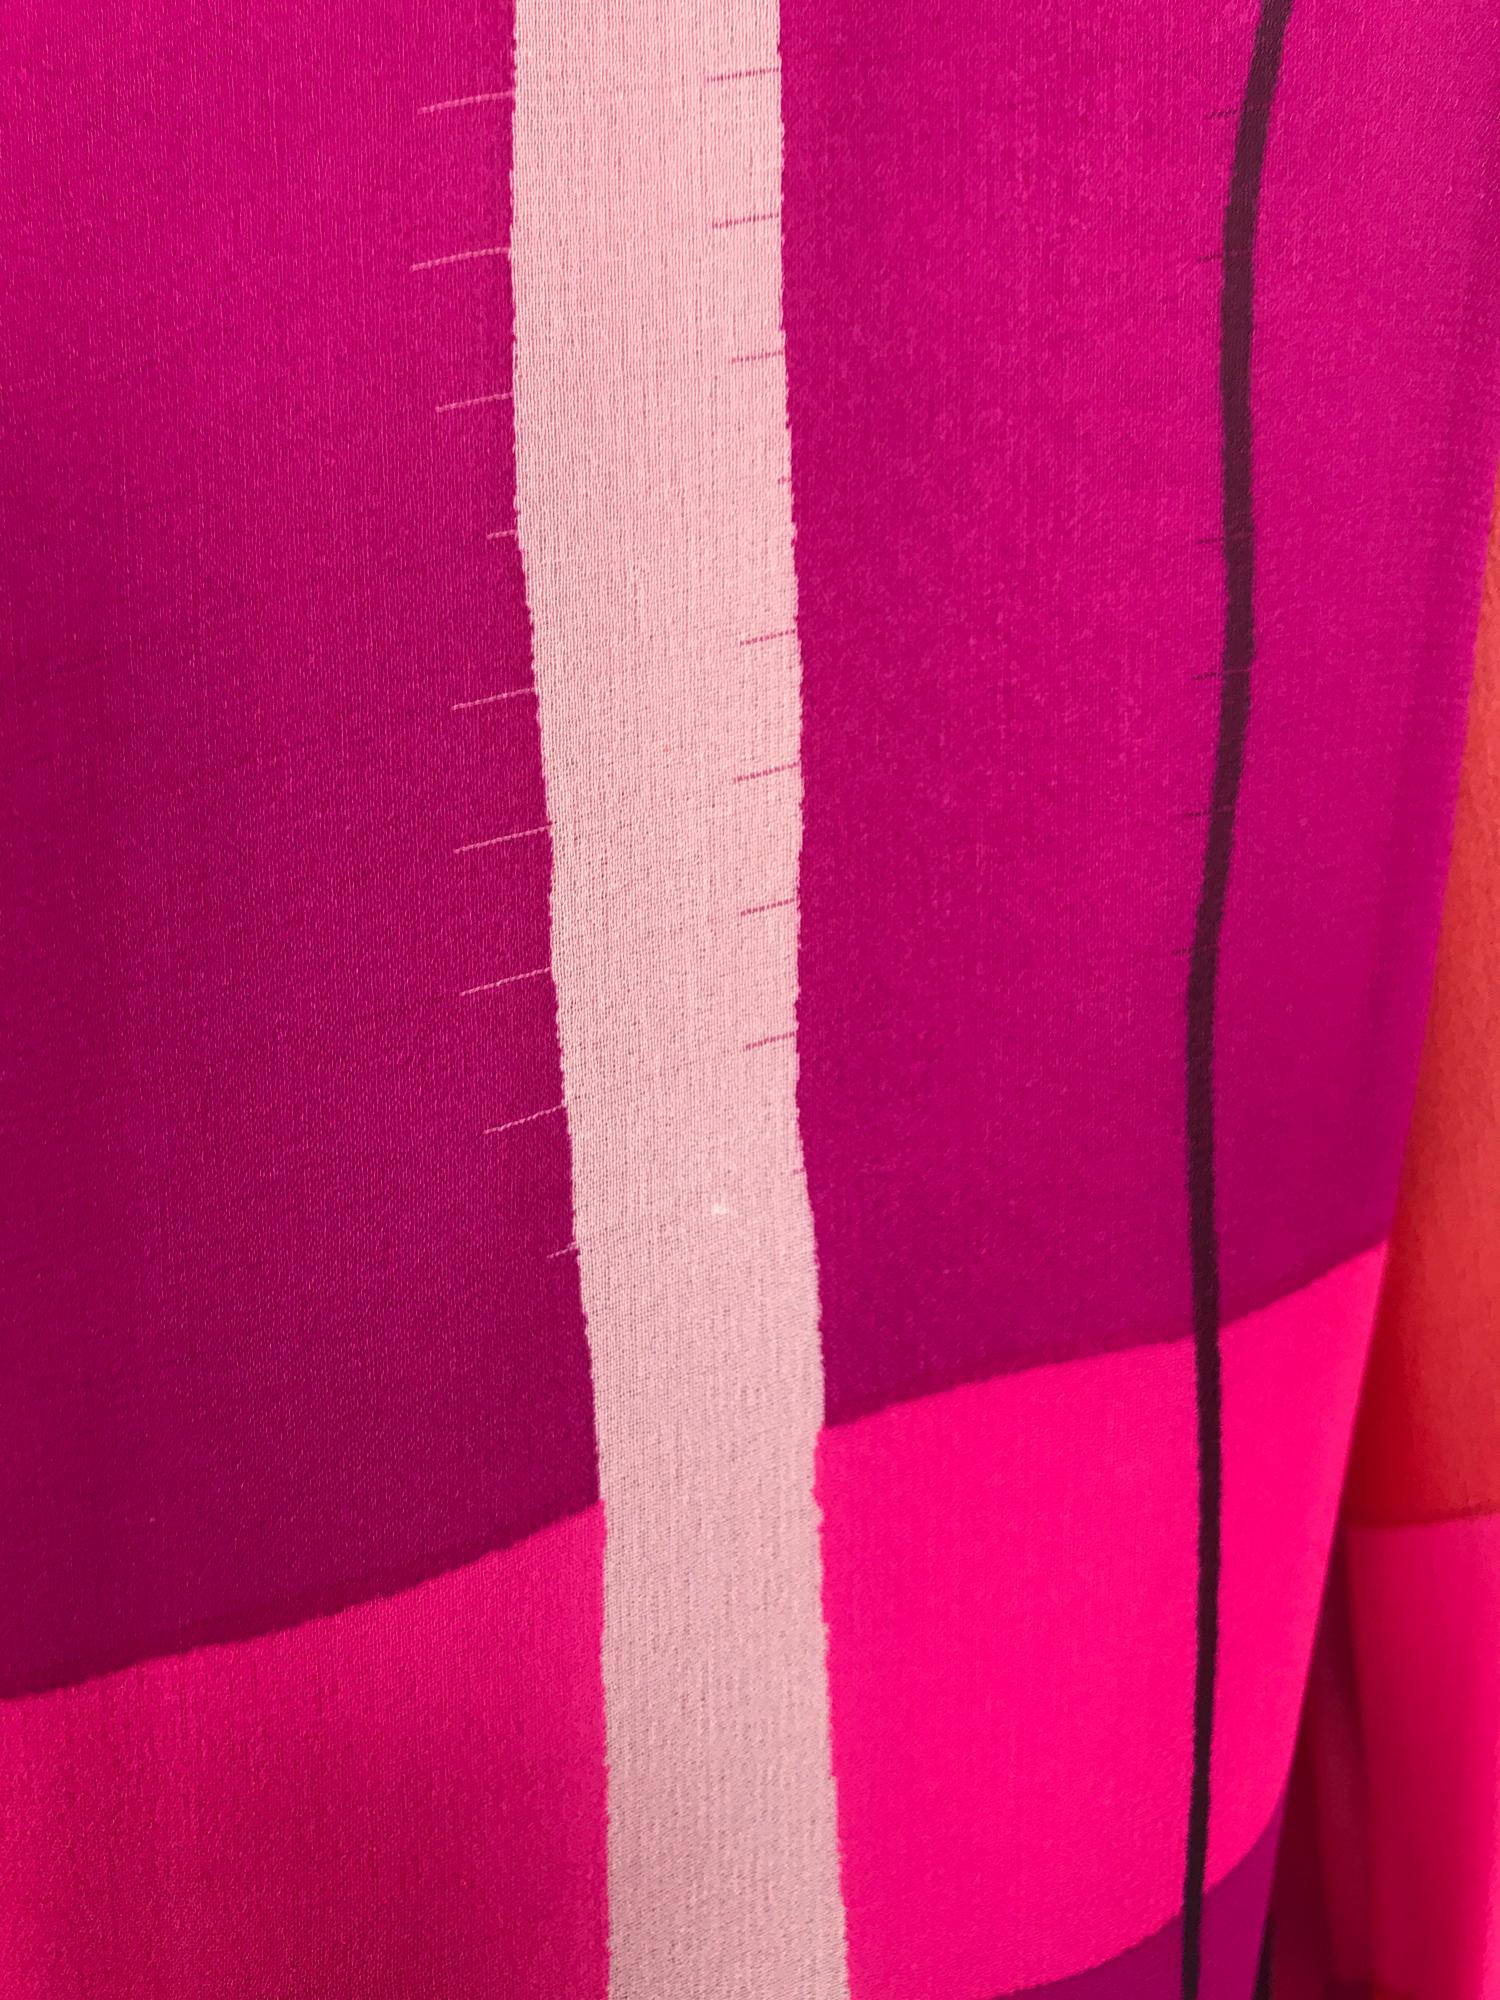 La Mendola Couture Hot Pink Silk Chiffon Modernist Print Dress 1970s 7